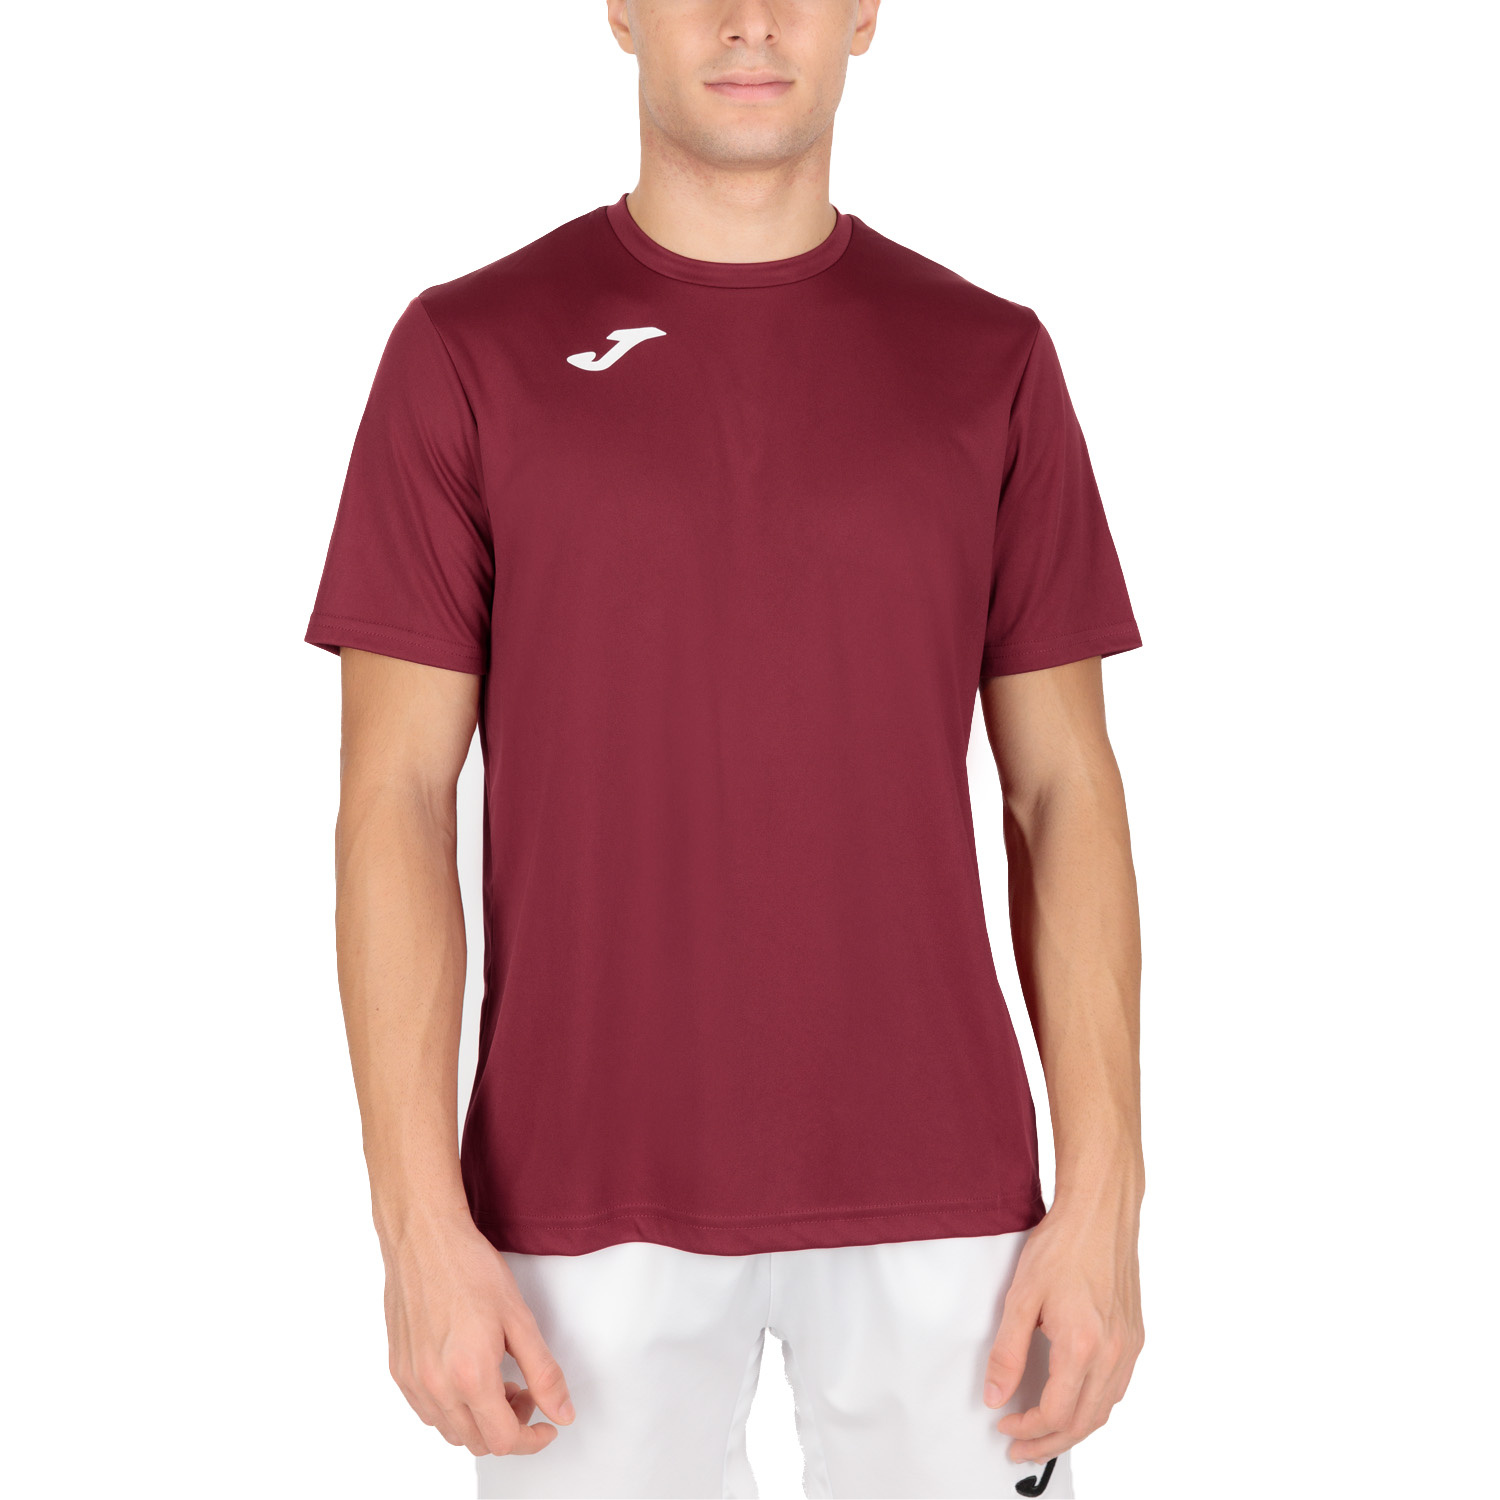 Joma Combi Camiseta - Bordeaux/White